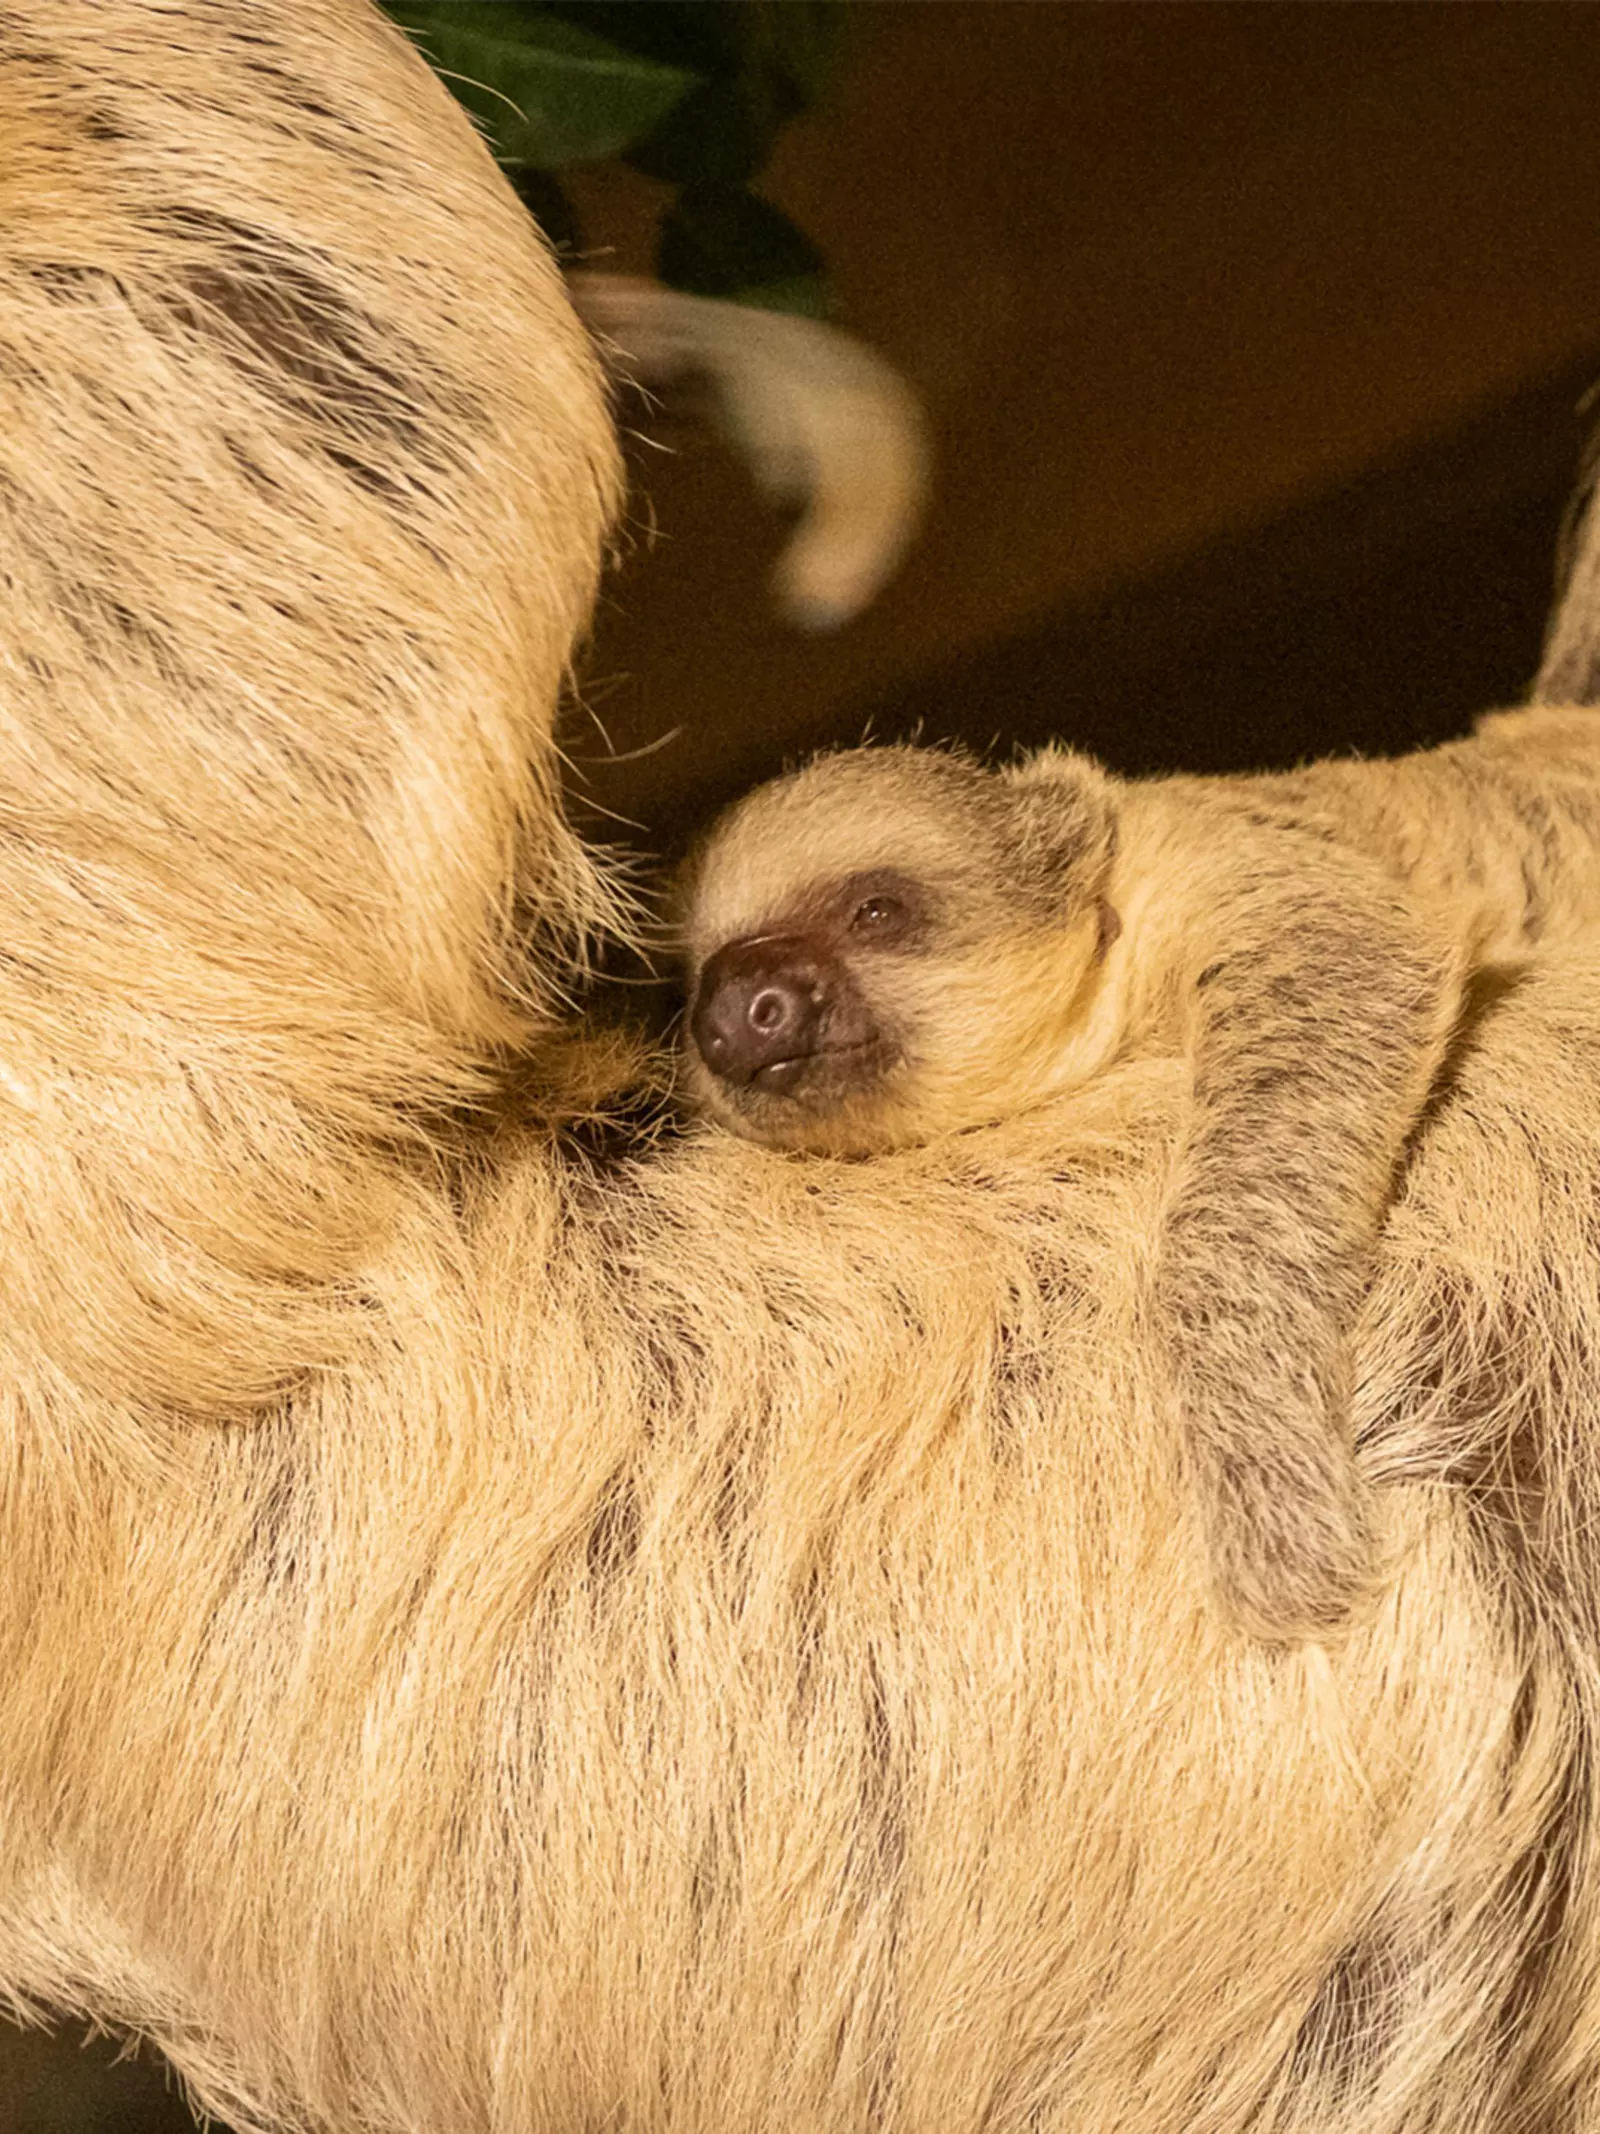 Baby sloth born Nova holding onto Mum Marilyn